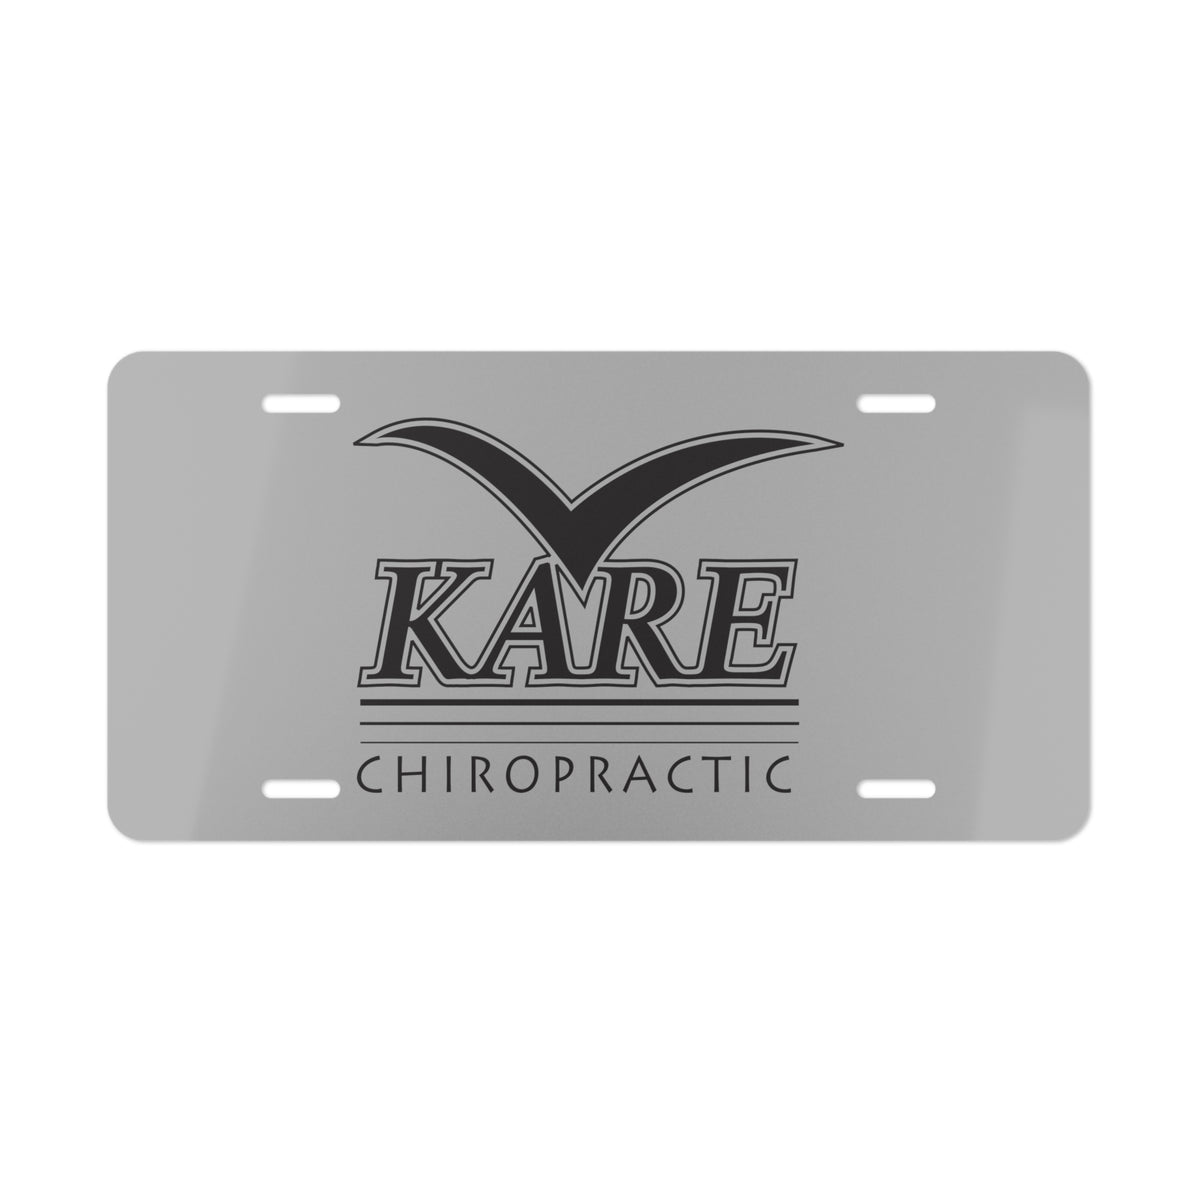 Kare Chiropractic Vanity Plate